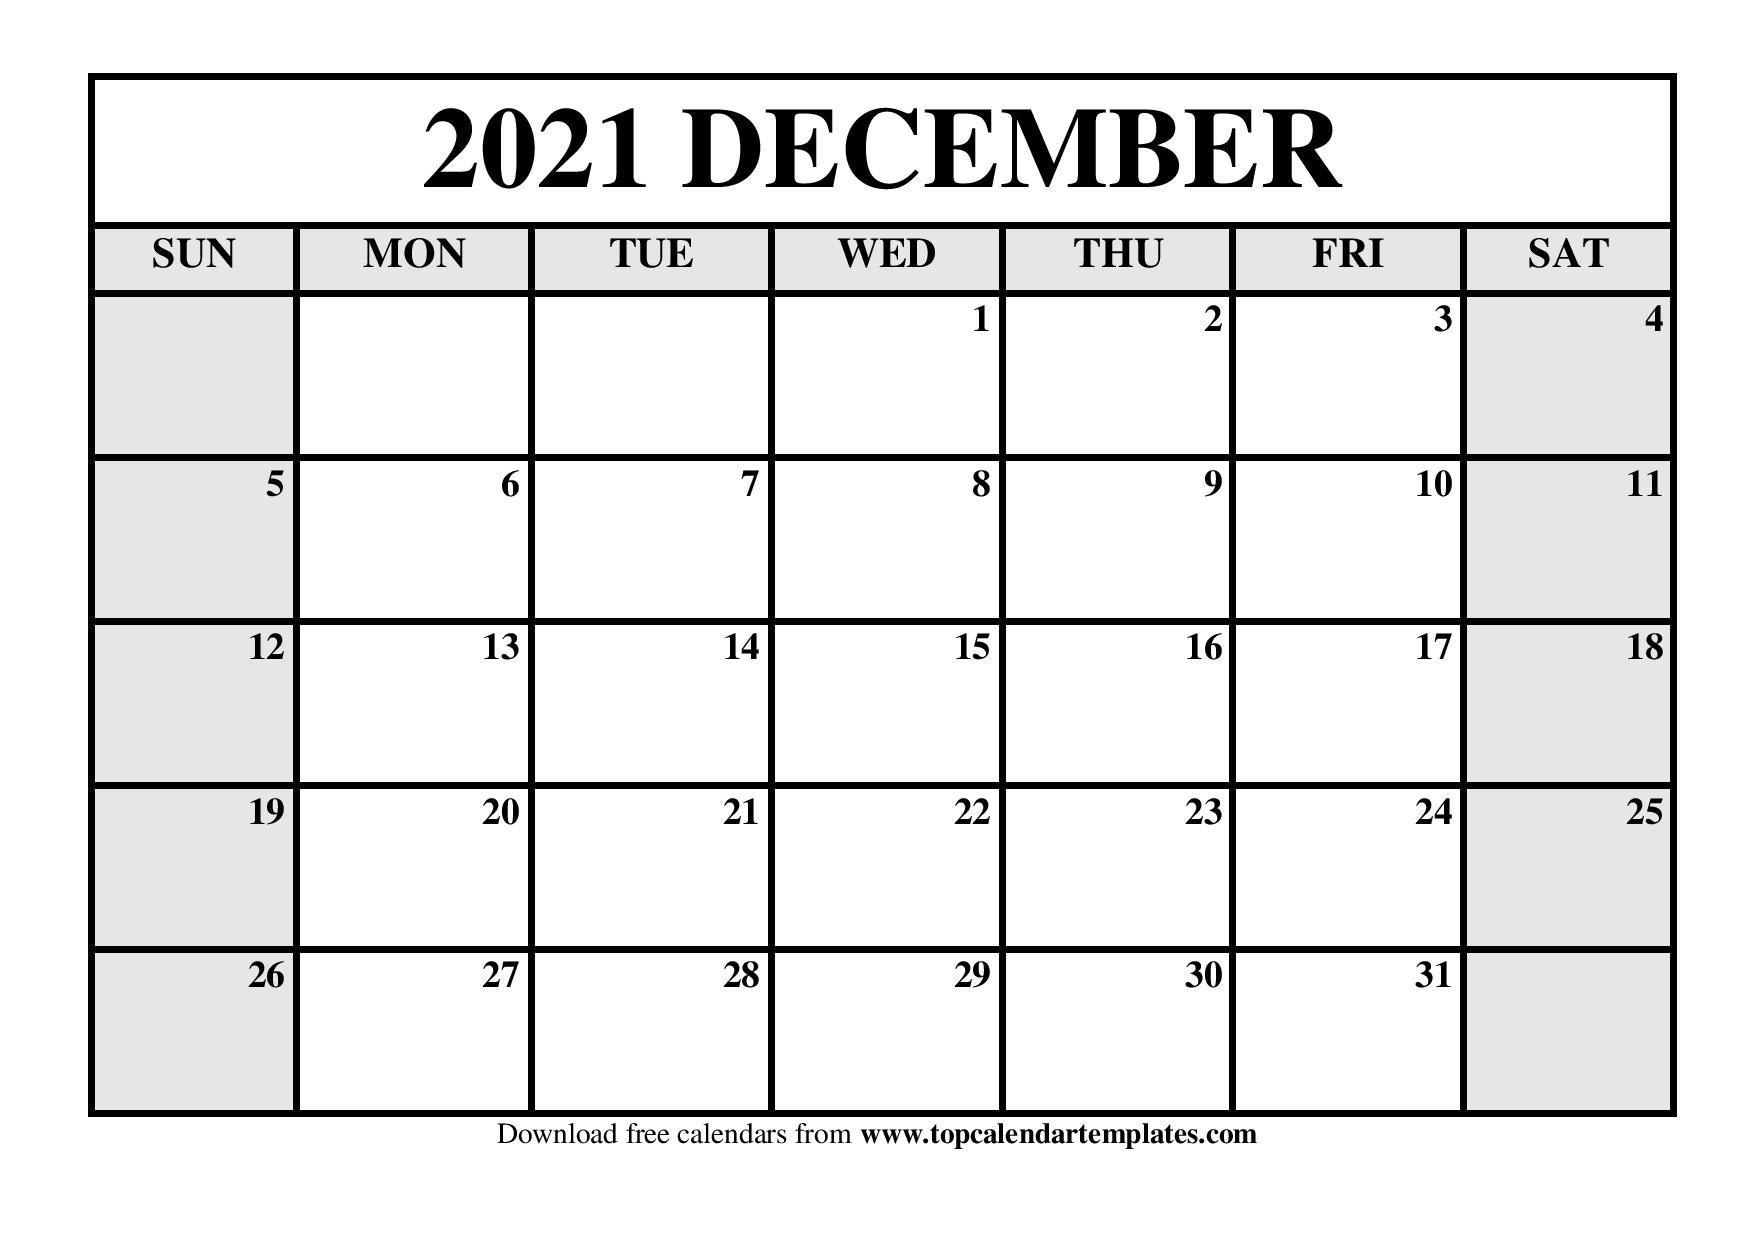 December 2021 Printable Calendar In Pdf Format Calendar 2021 January To December Pdf